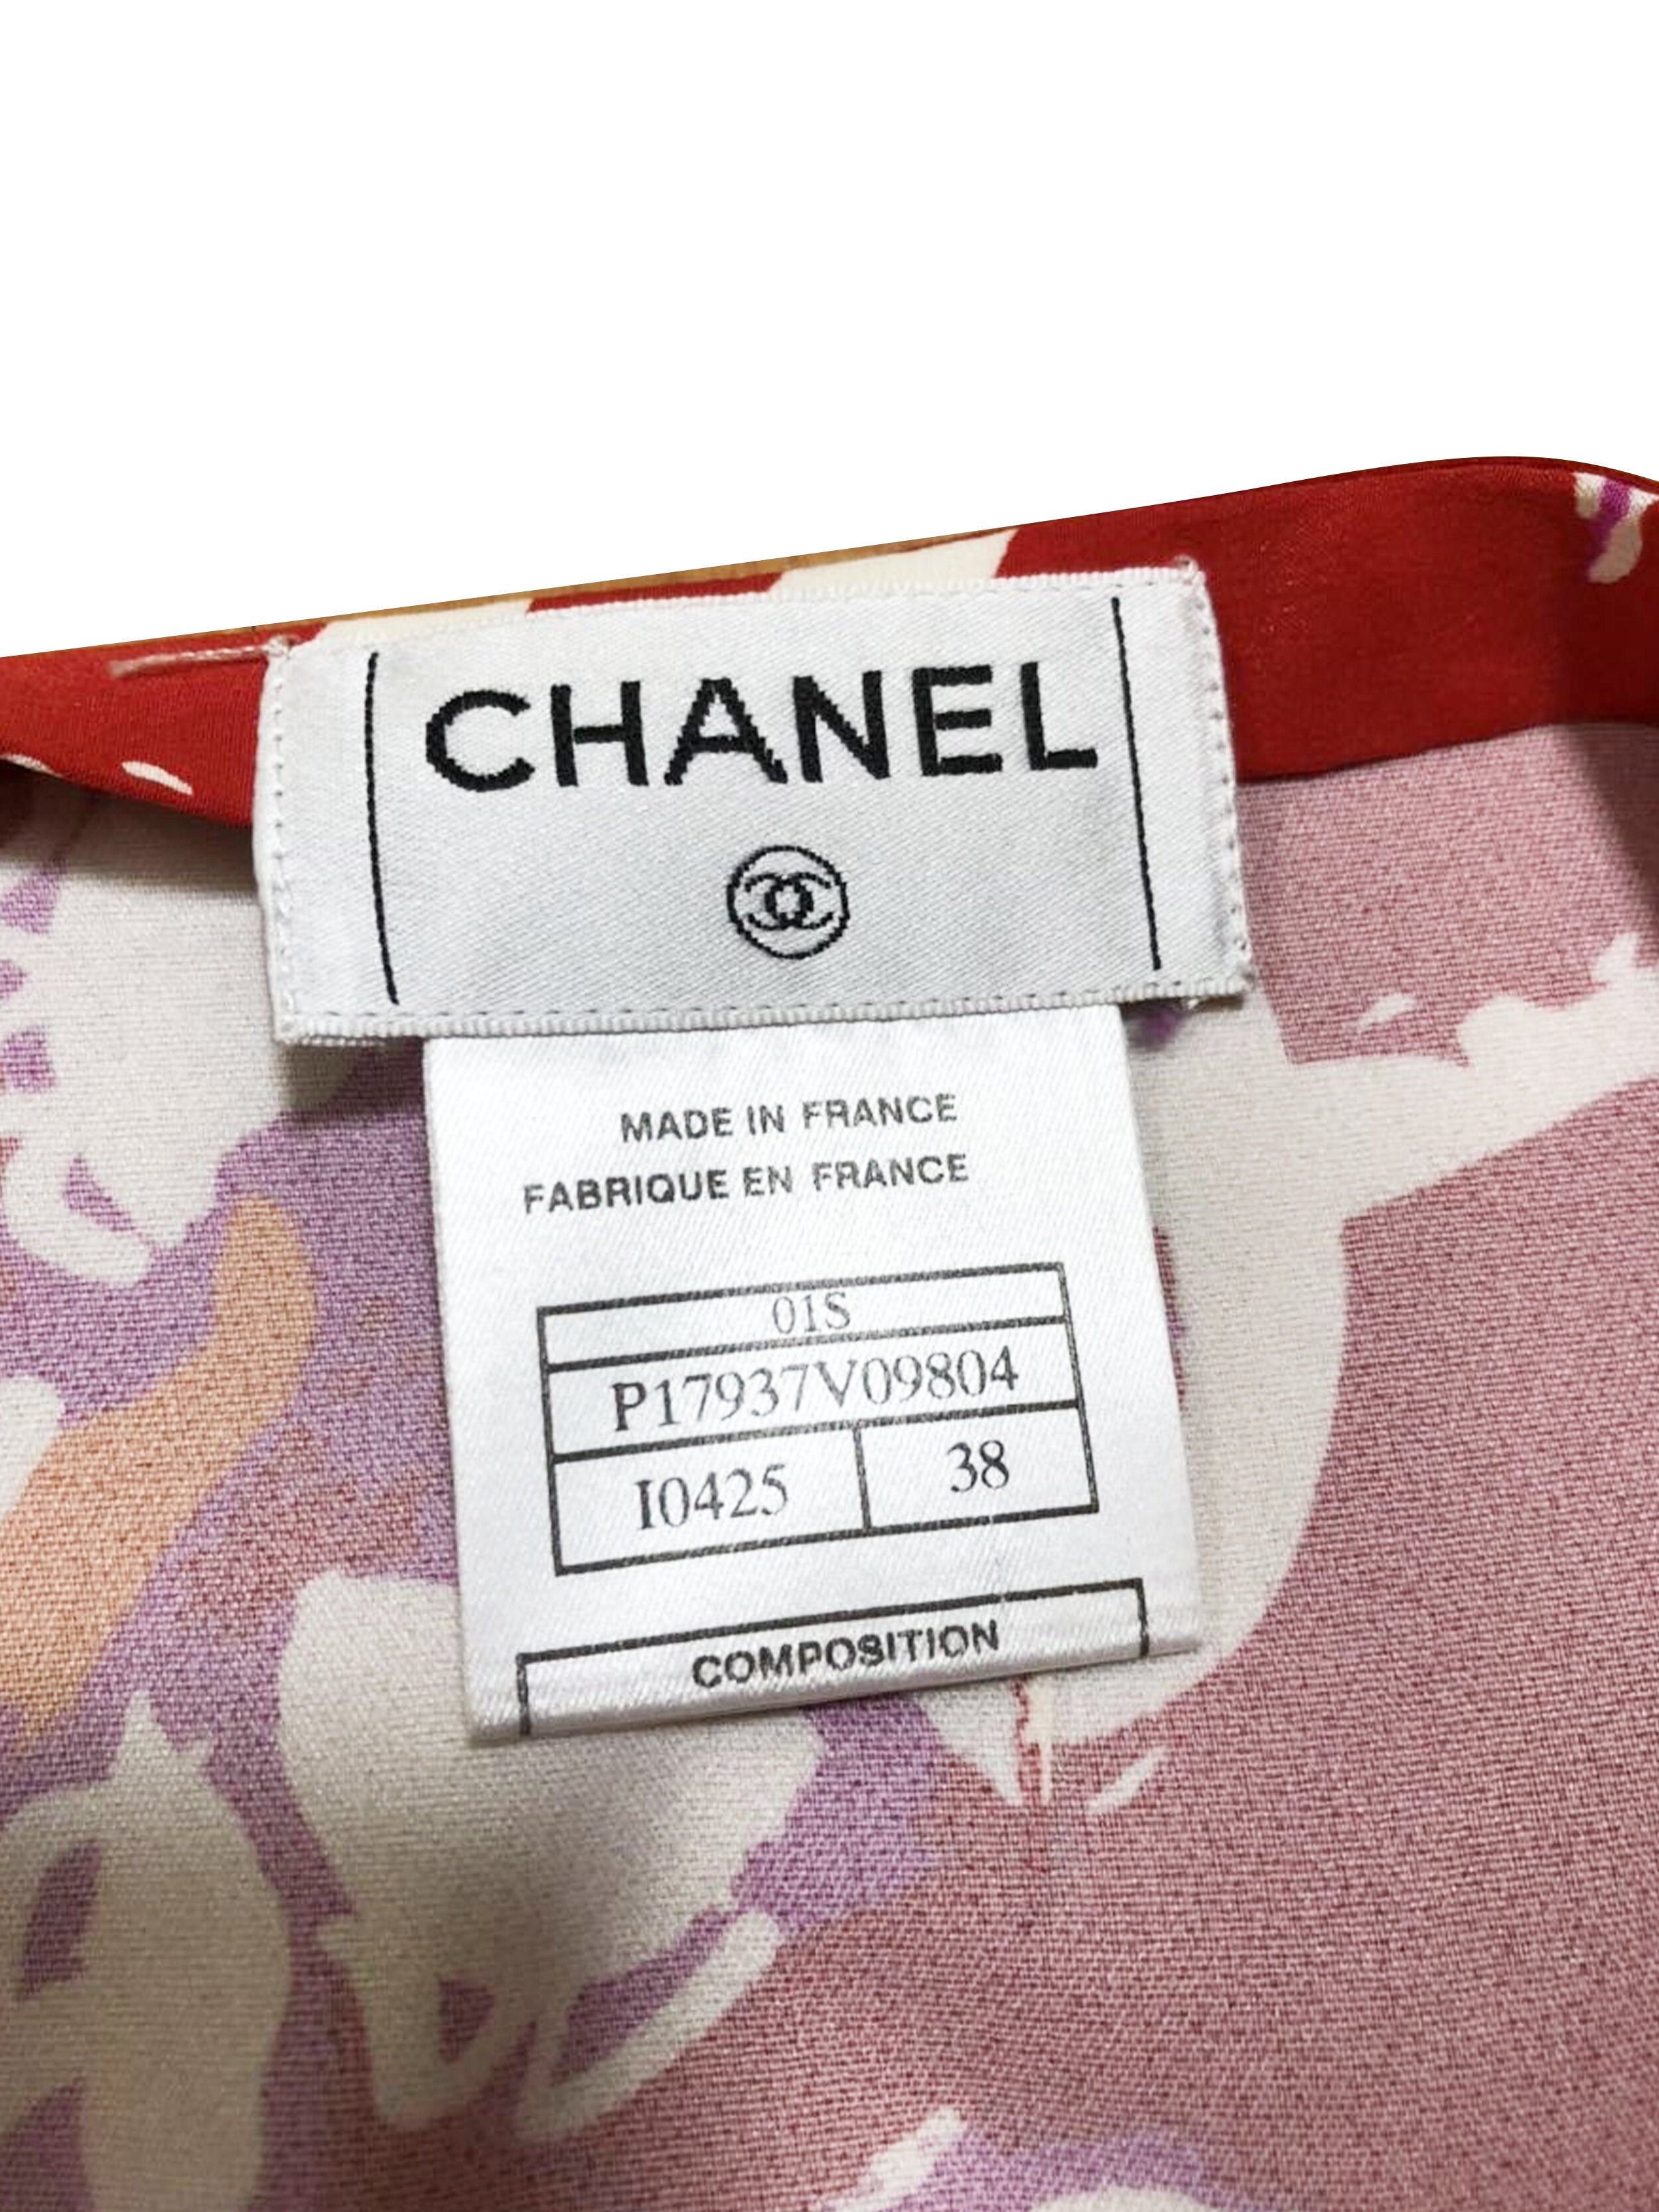 Chanel Brand New Beige Gold Camellia Stitching Sweatshirt